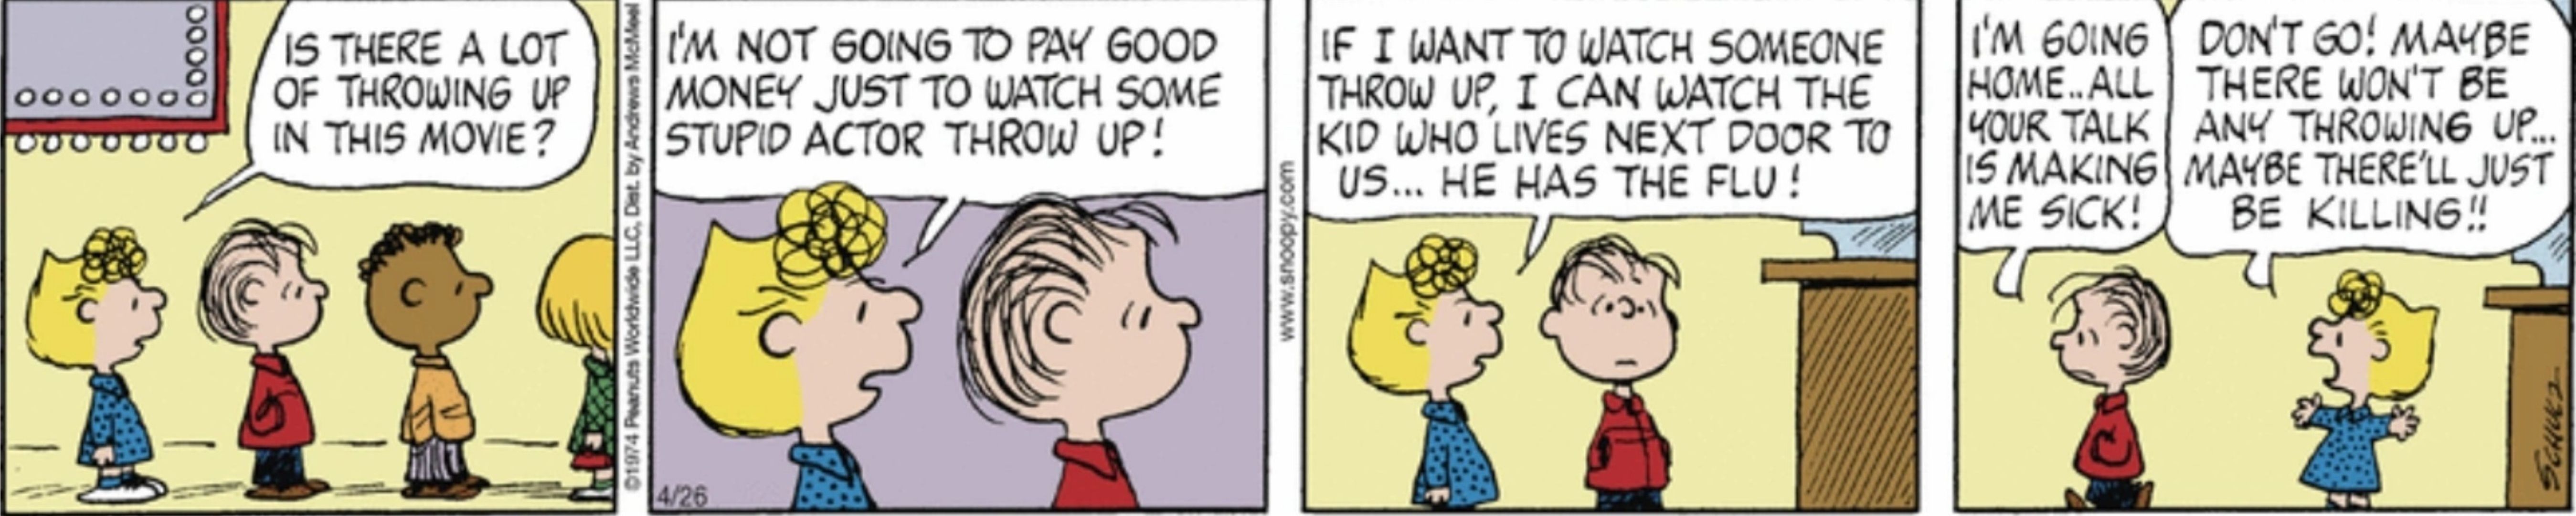 Sally e Linus na fila do Peanuts.